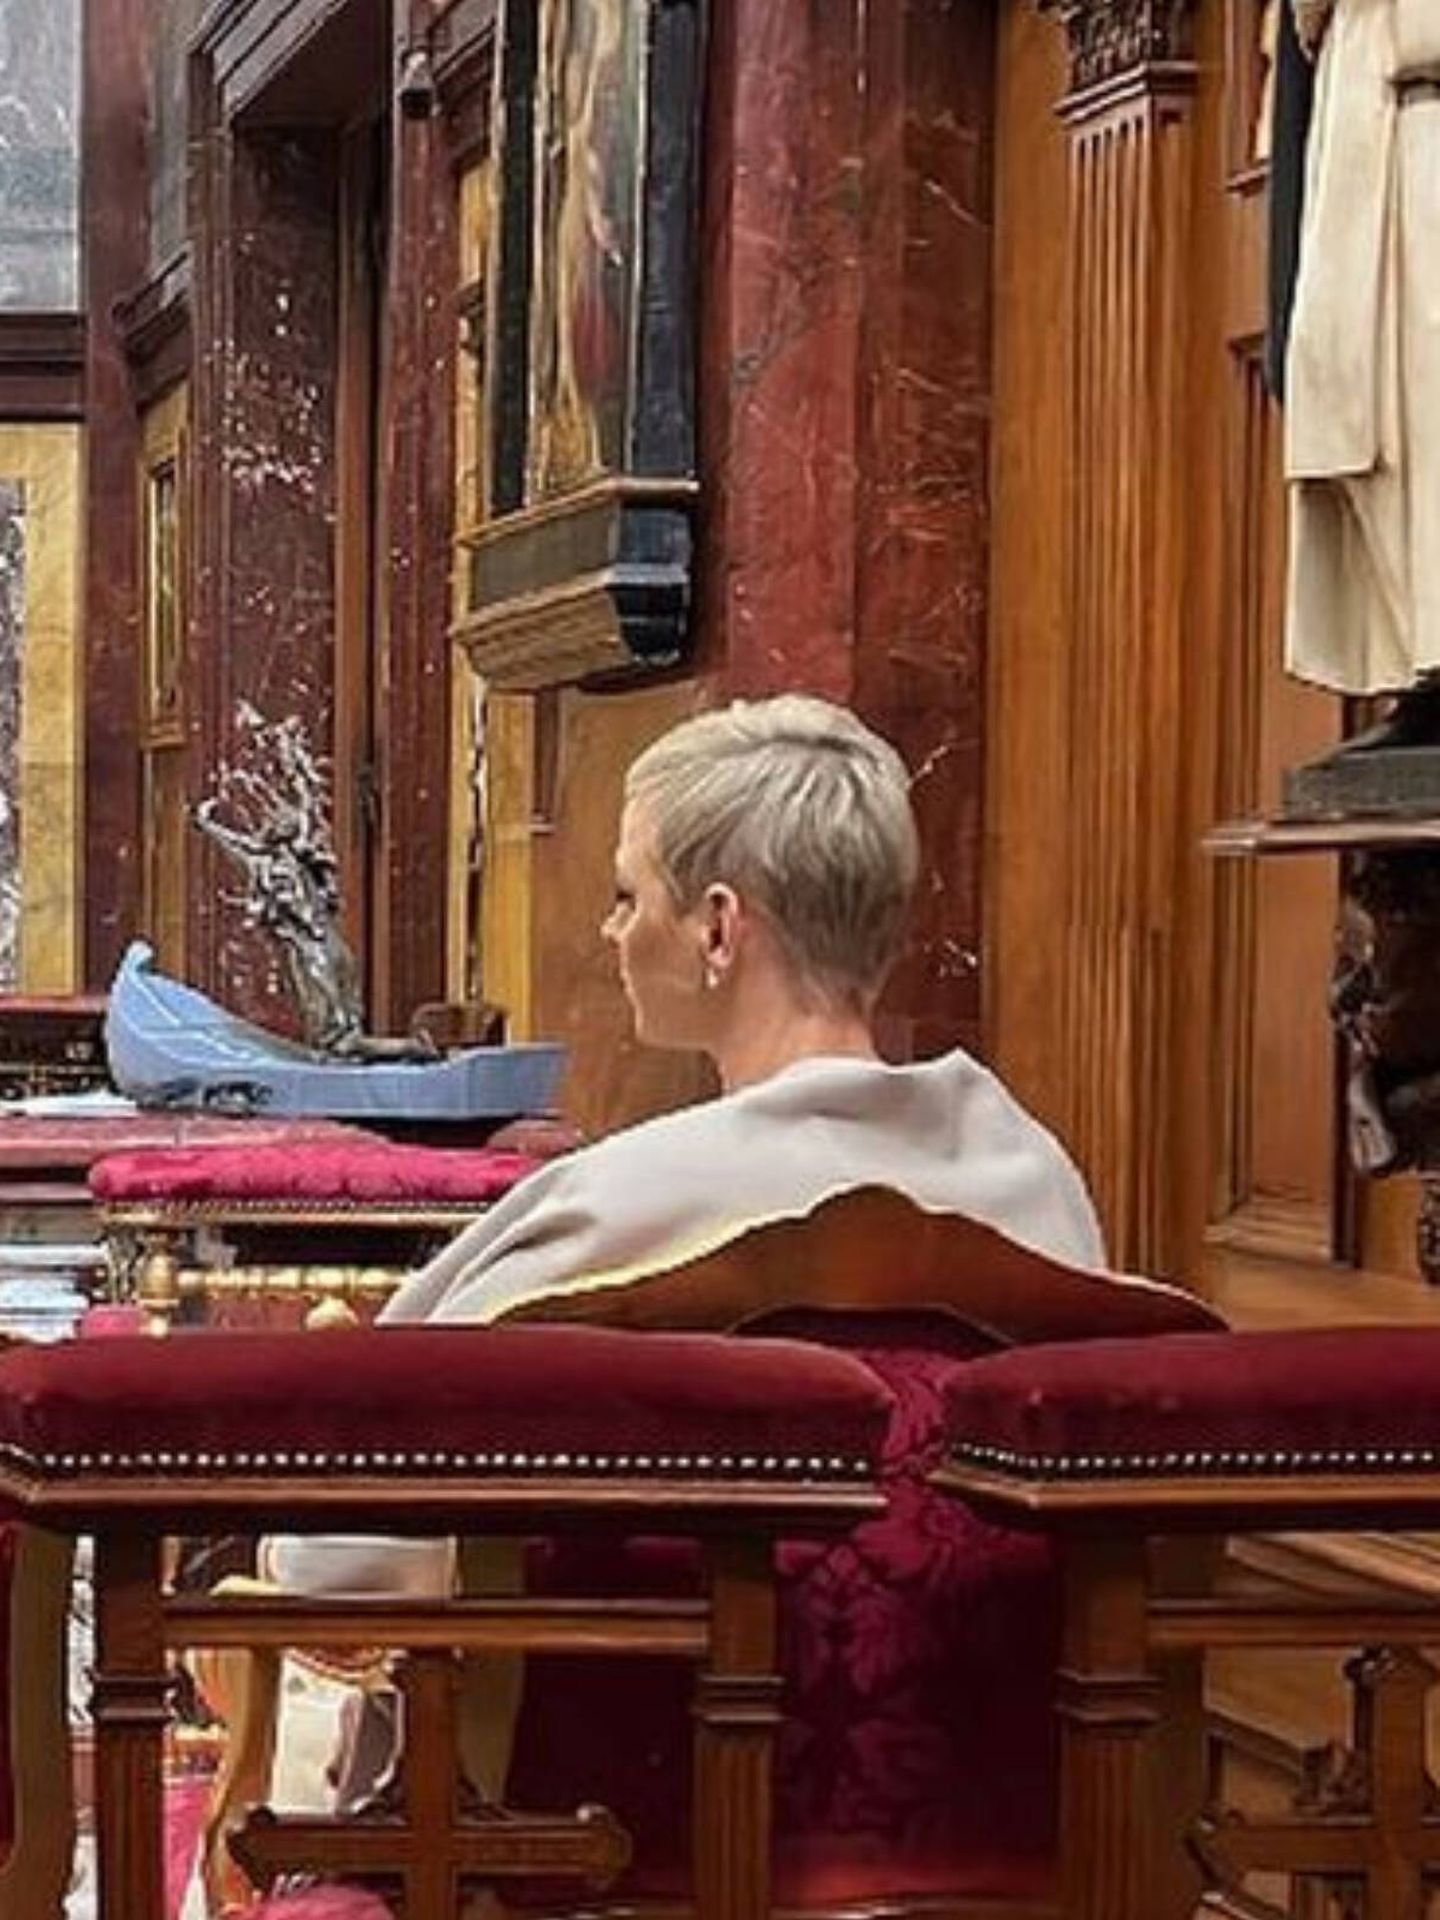 Detalle de la nuca despejada de Charlène de Mónaco. (Instagram/@palaisprincierdemonado)